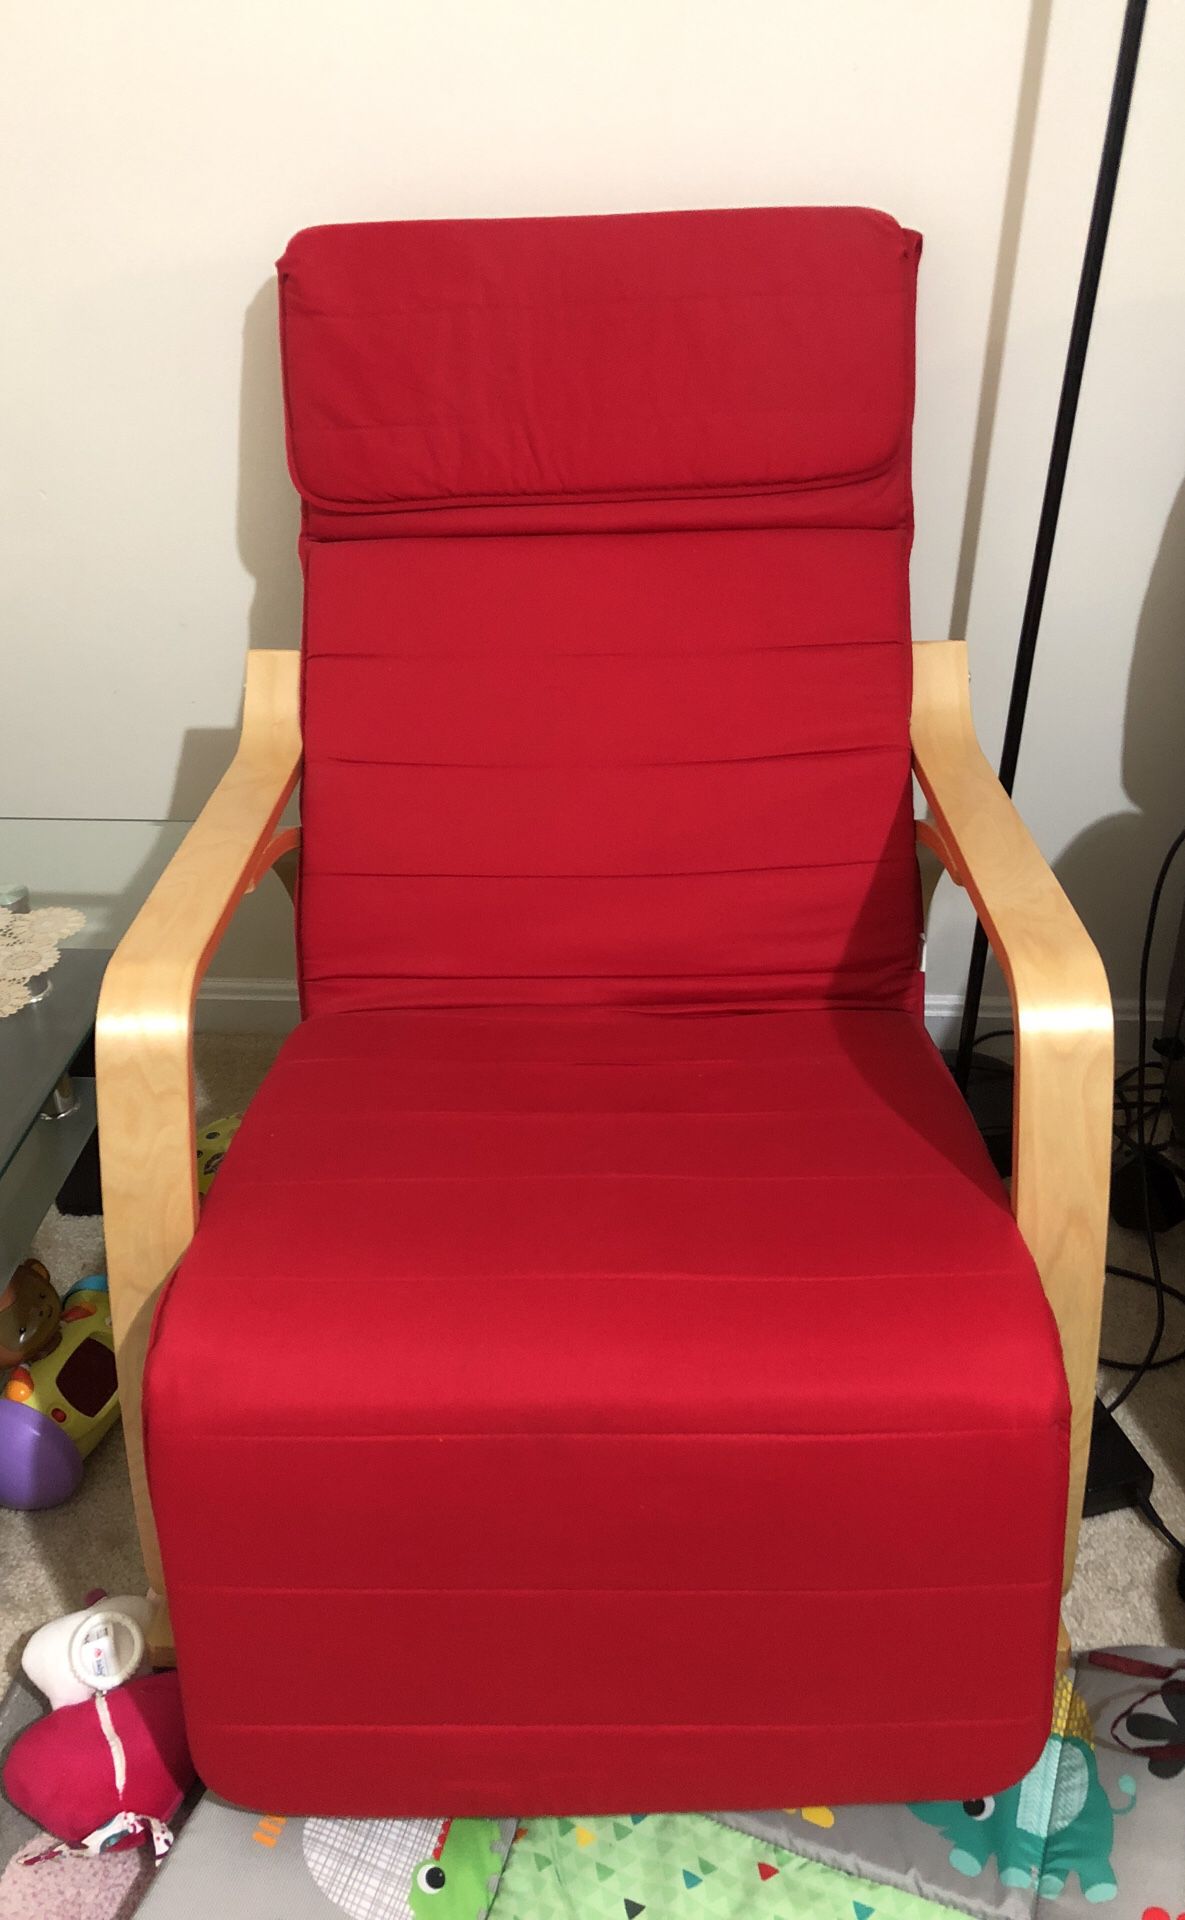 Recliner chair (4 positions recliner)